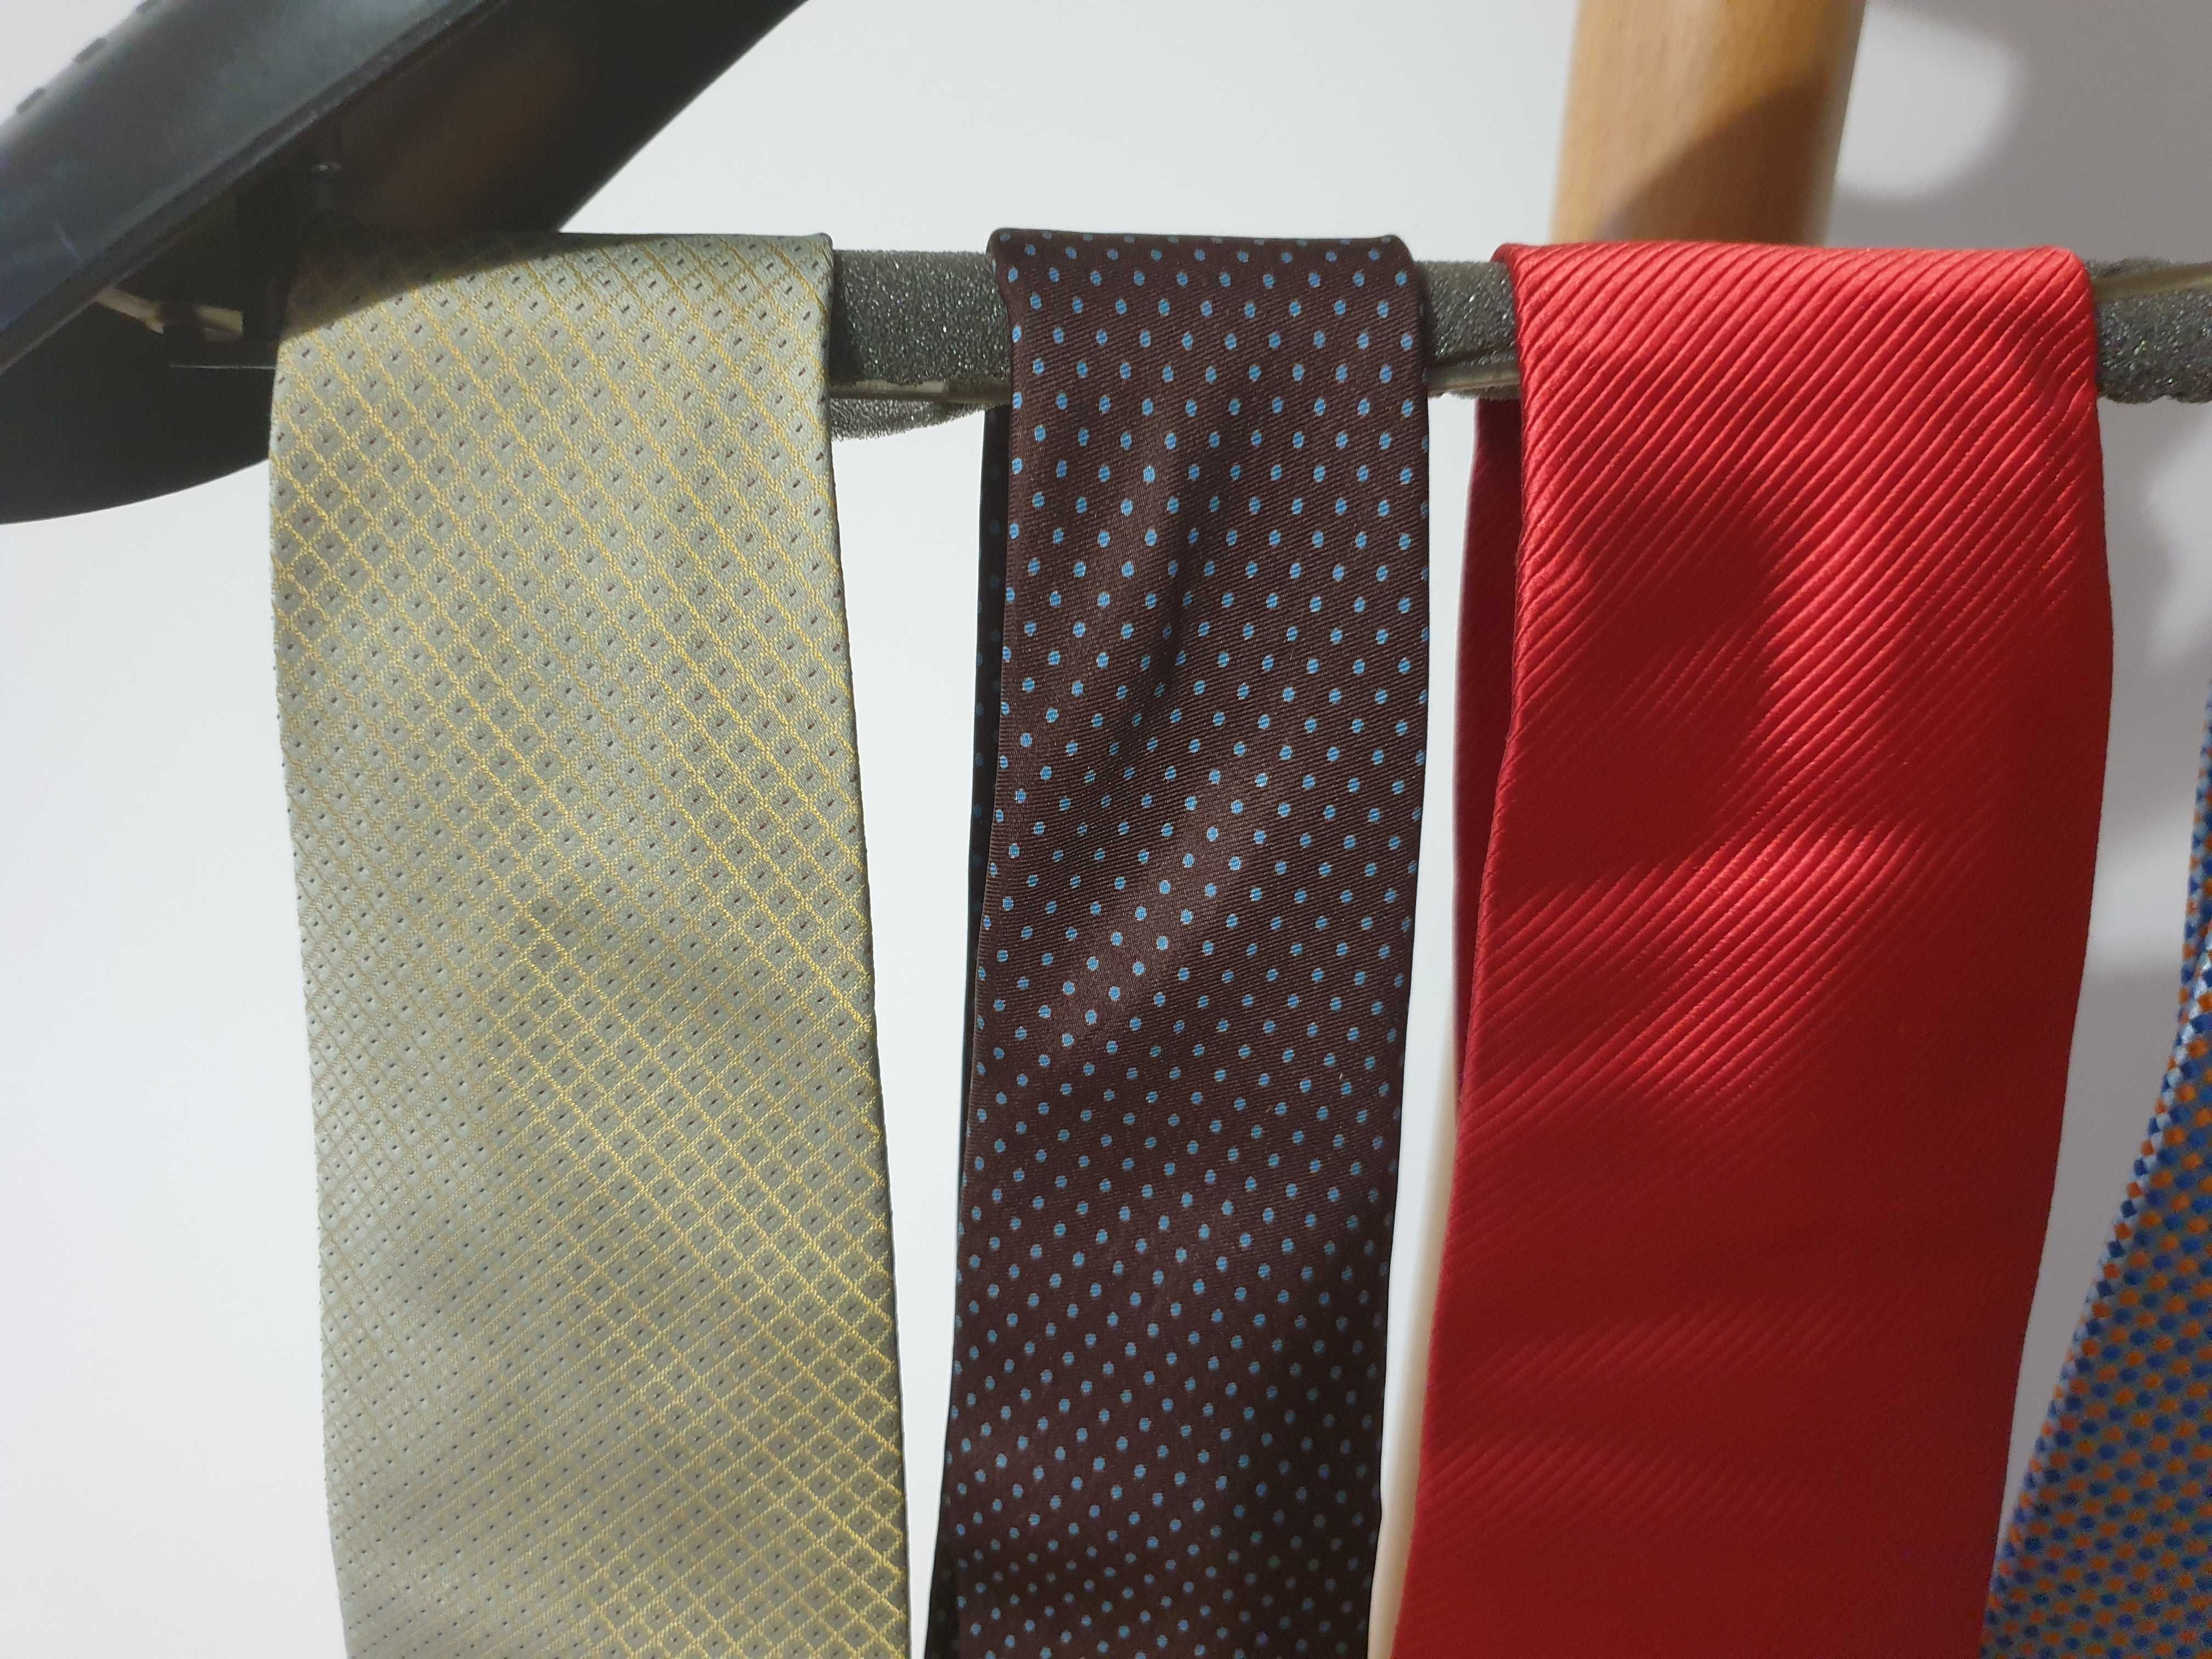 Krawaty-zestaw 5szt